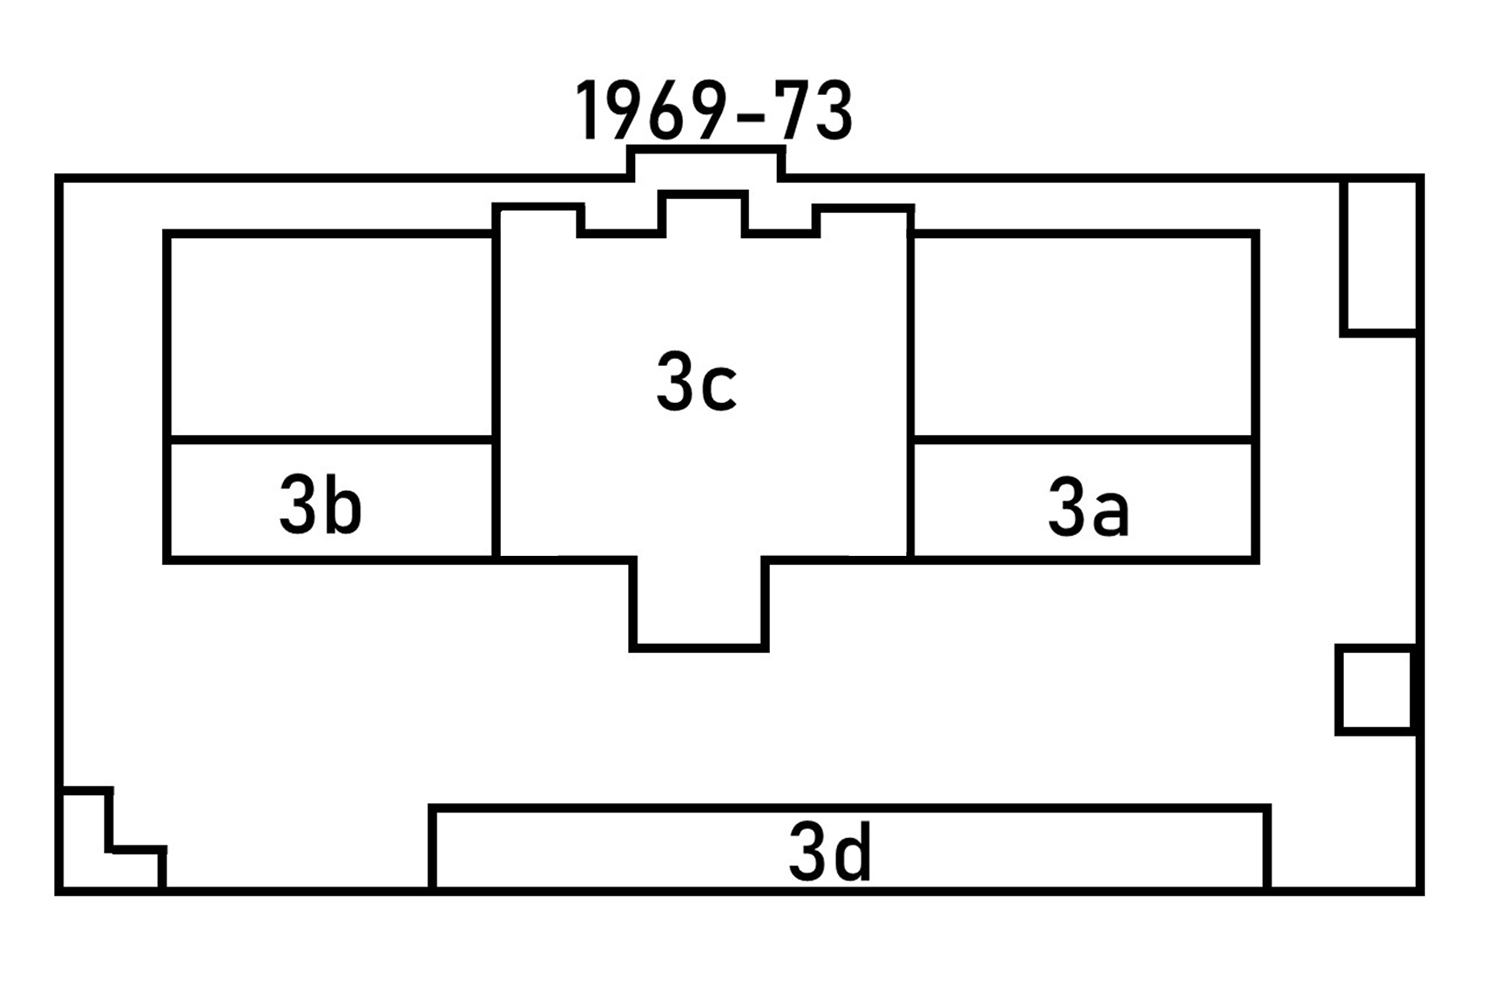 The design evolution of the Grand Mosque of Niono